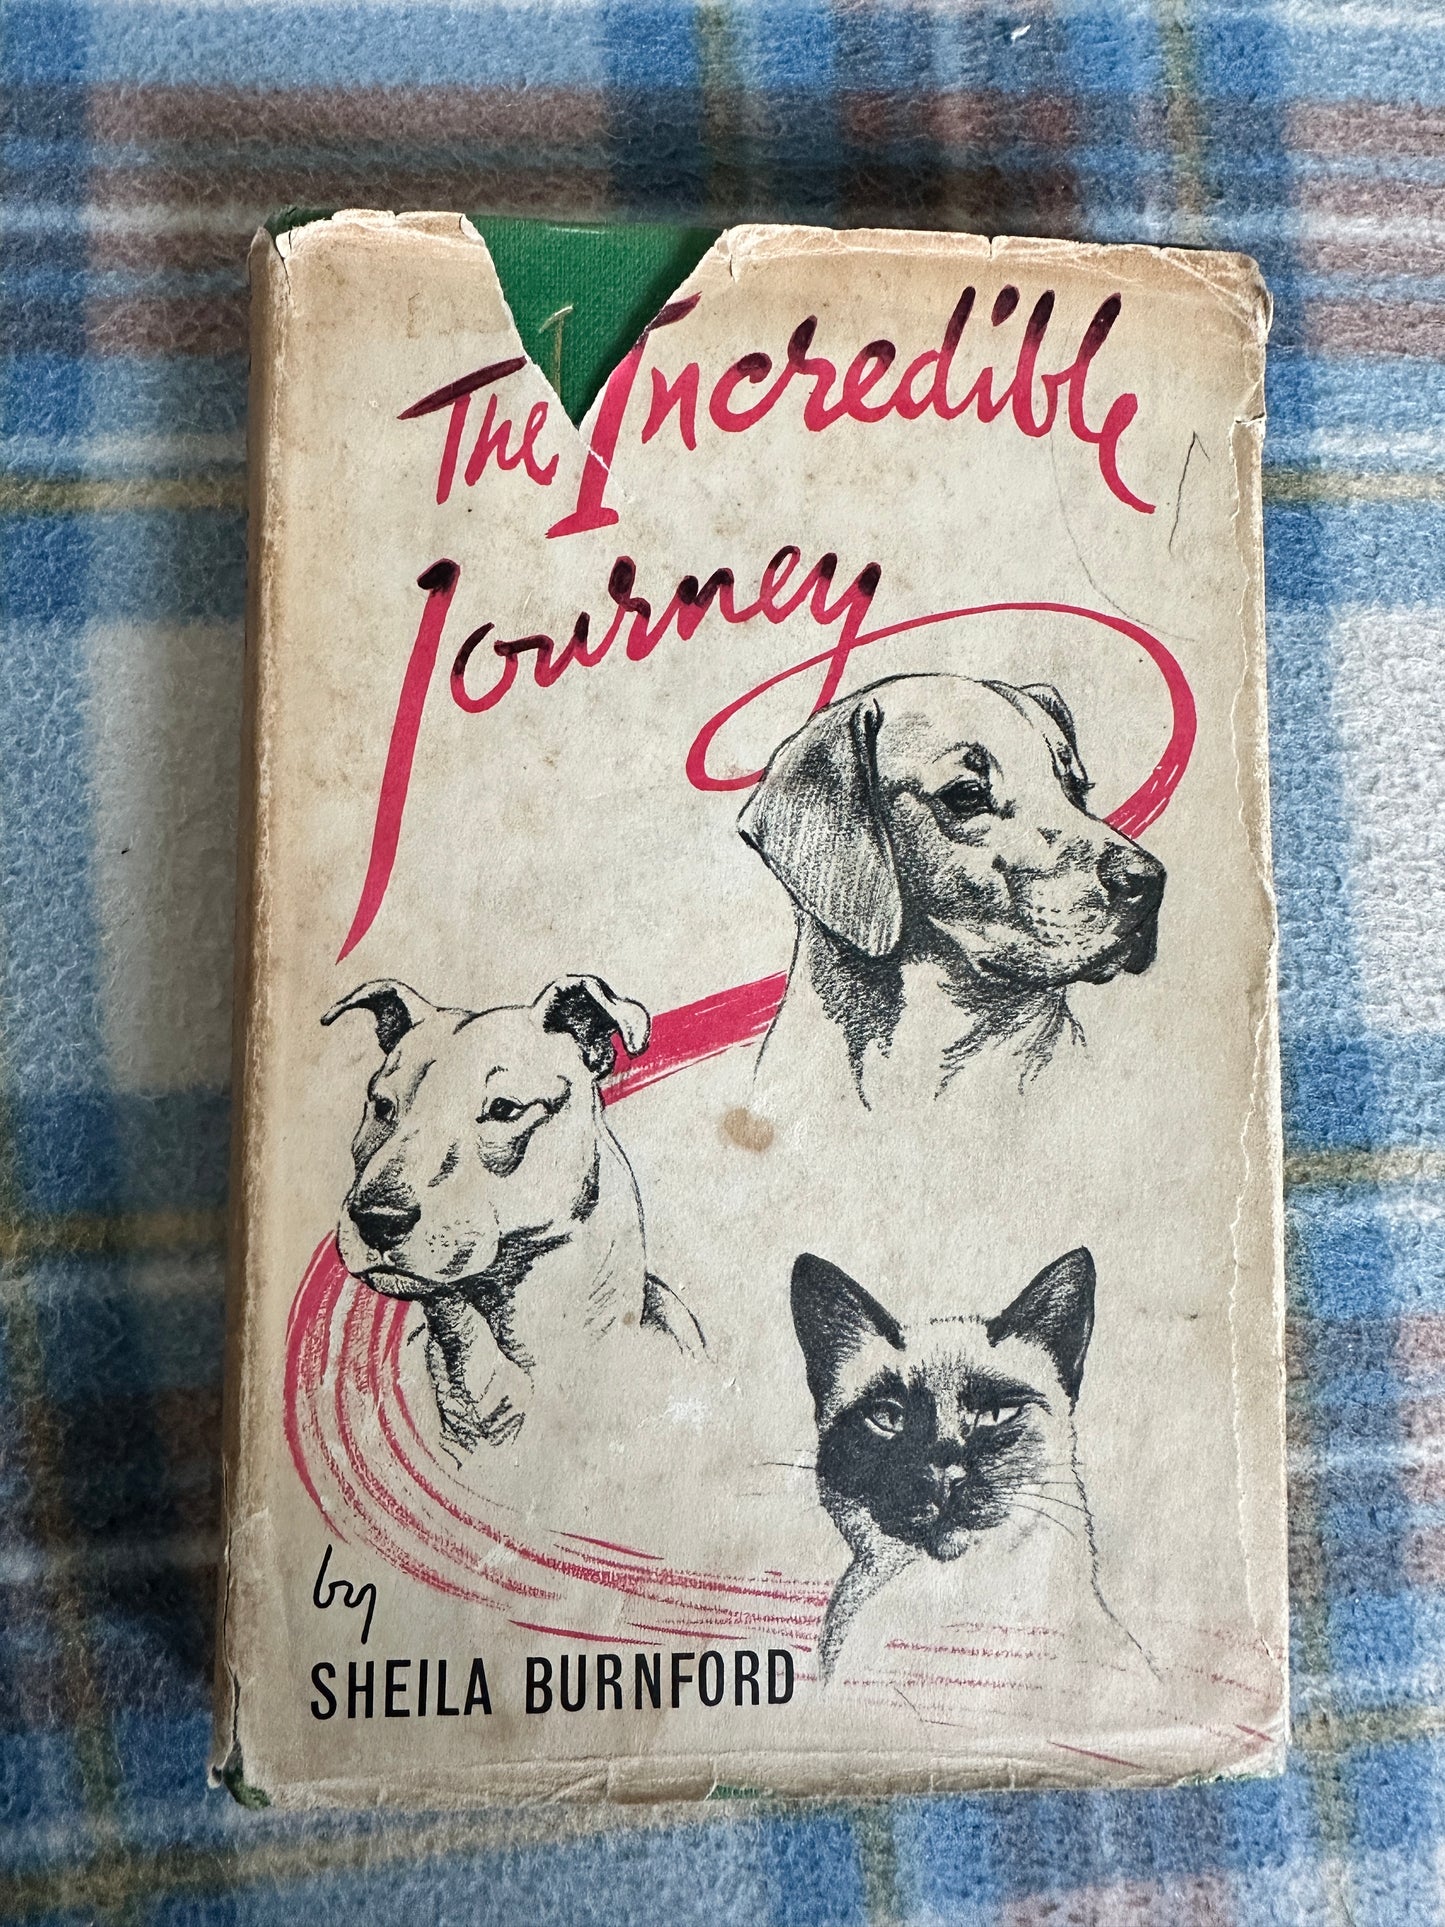 1962 The Incredible Journey - Sheila Burnford(Carl Burger Illust) Hodder & Stoughton